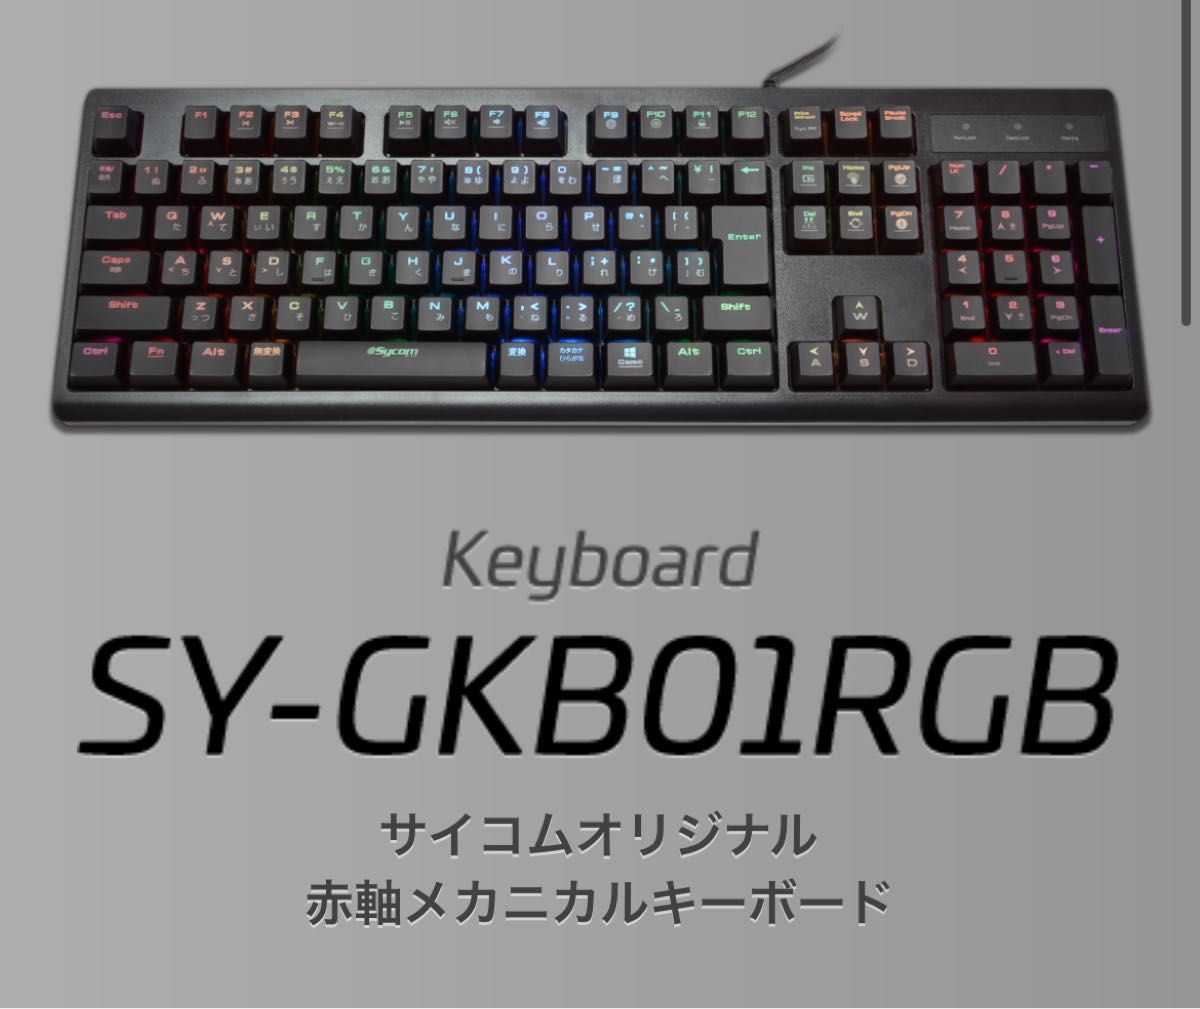 SY-GKB01RGB サイコムオリジナルRGB仕様メカニカルキーボード 